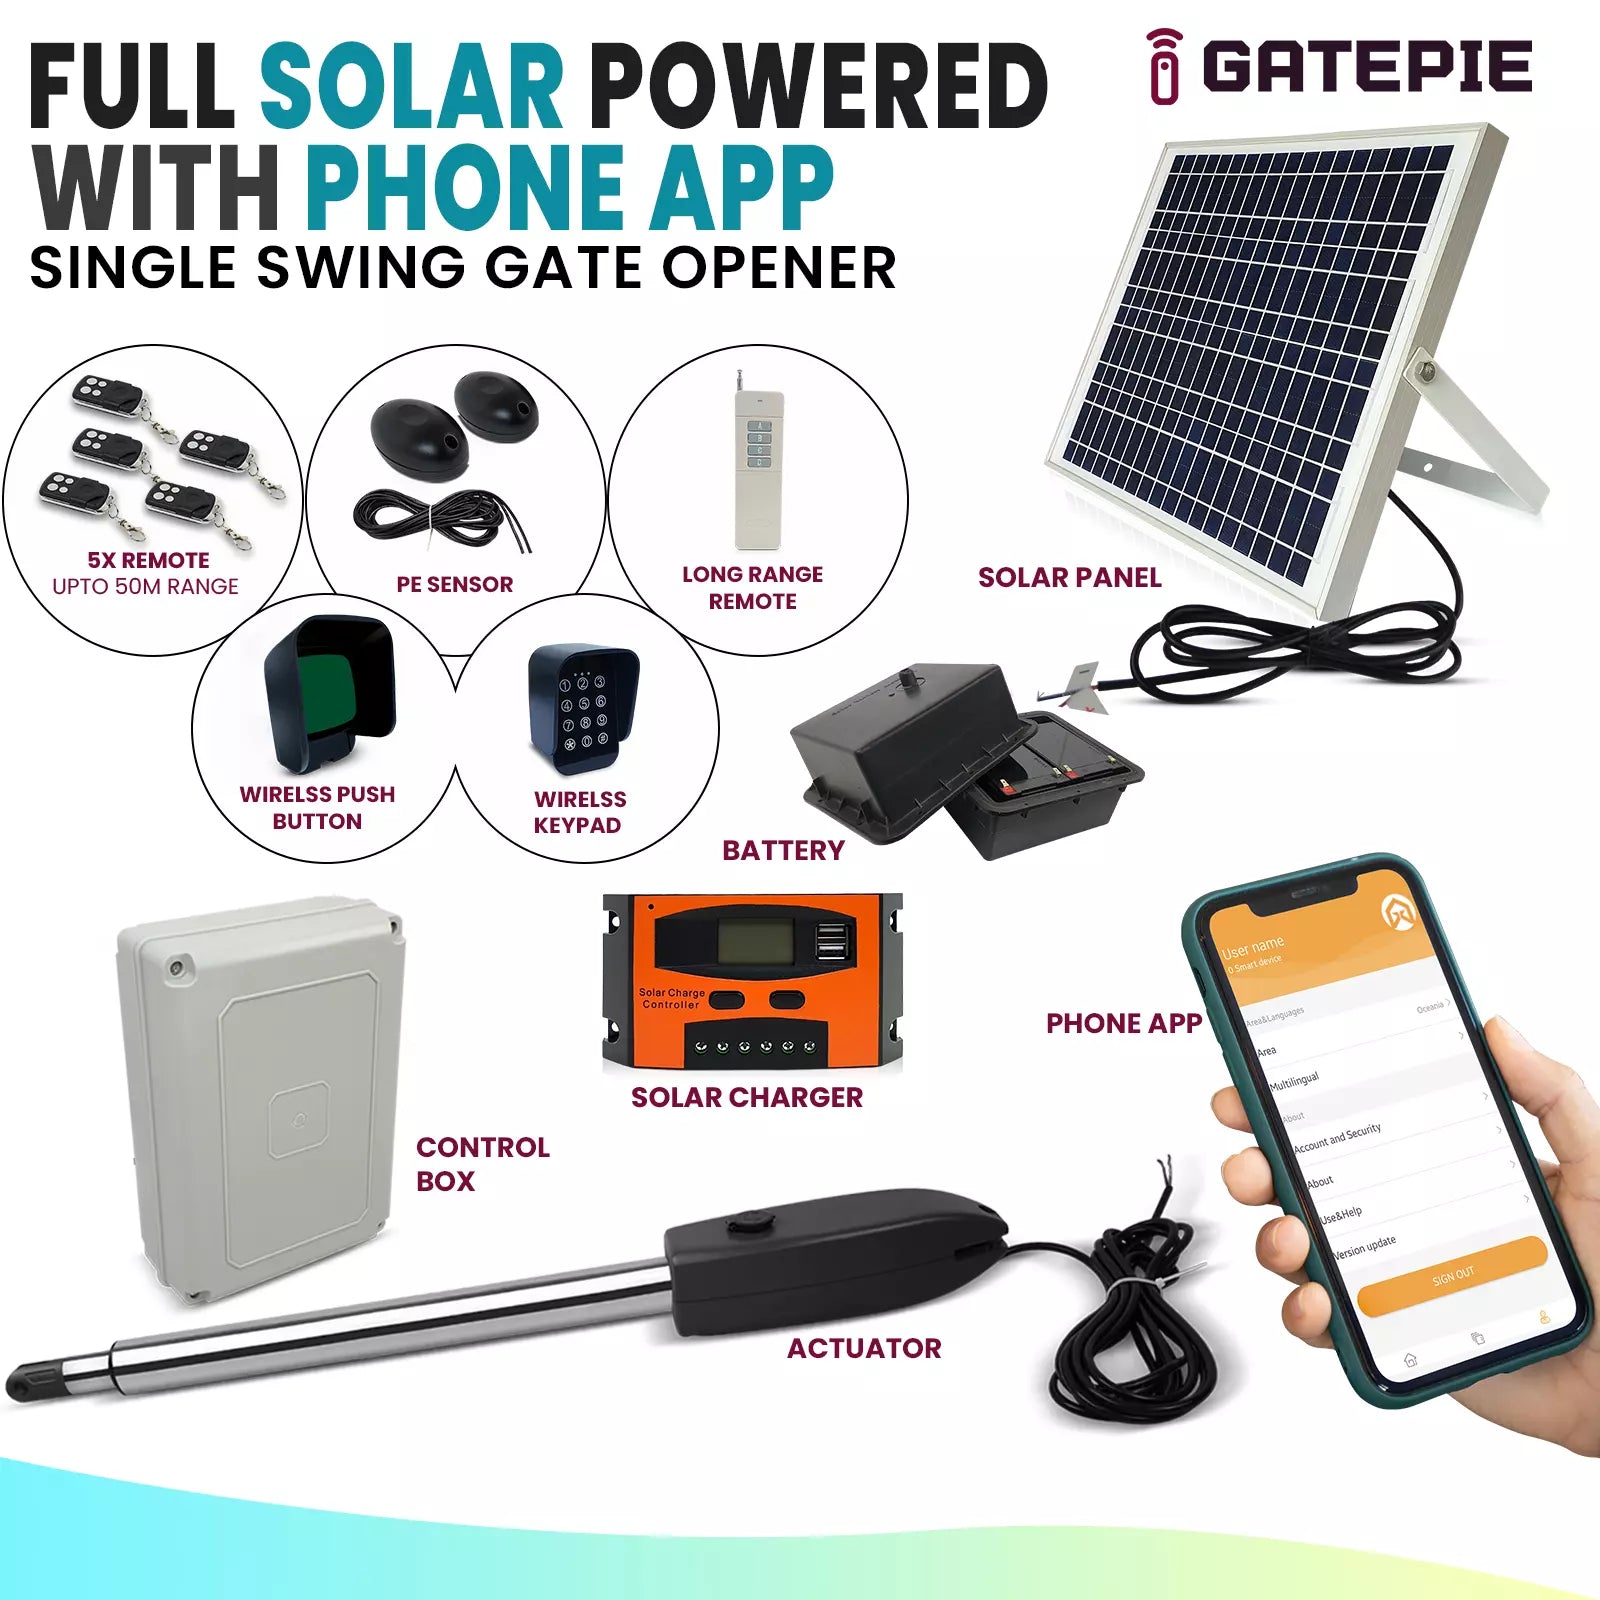 Full Solar Powered Single Swing Gate Opener Motor DIY kit with WiFi Phone APP